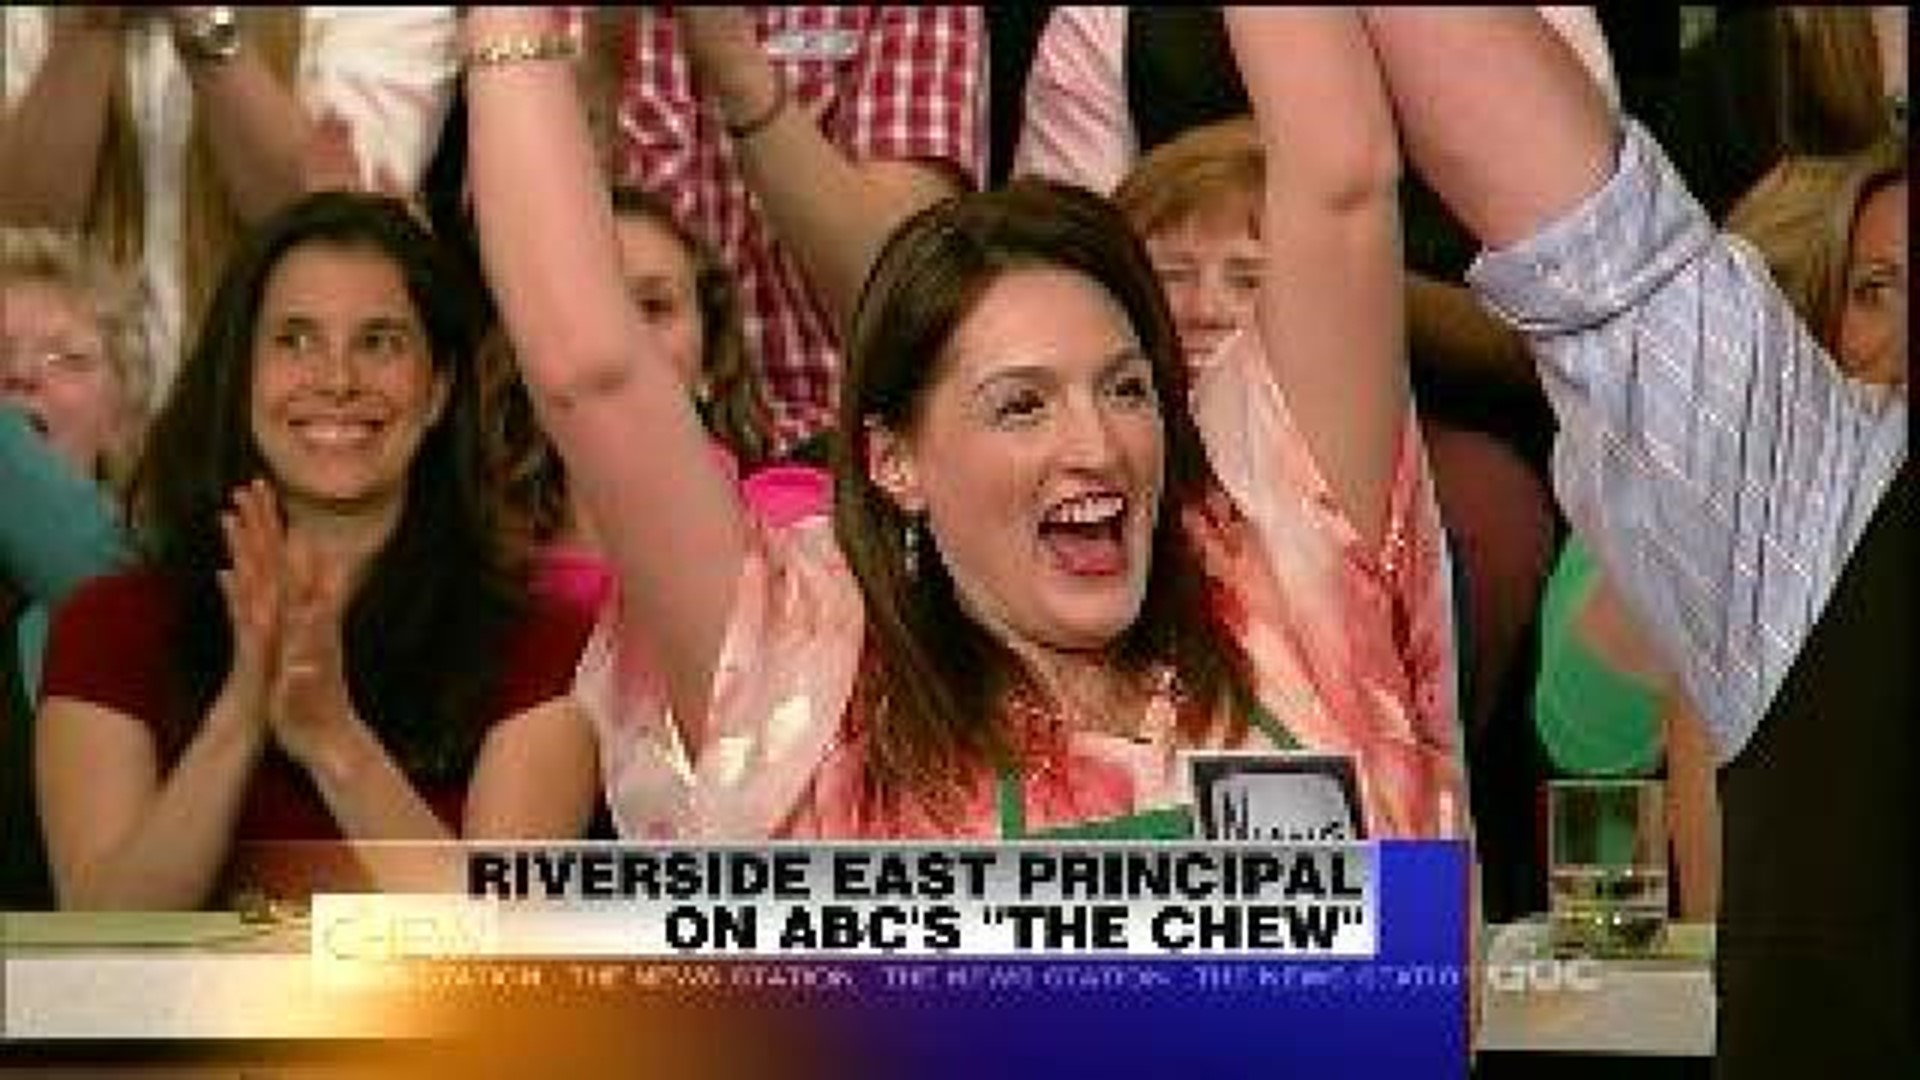 Riverside East Principal On ABC’s “The Chew”